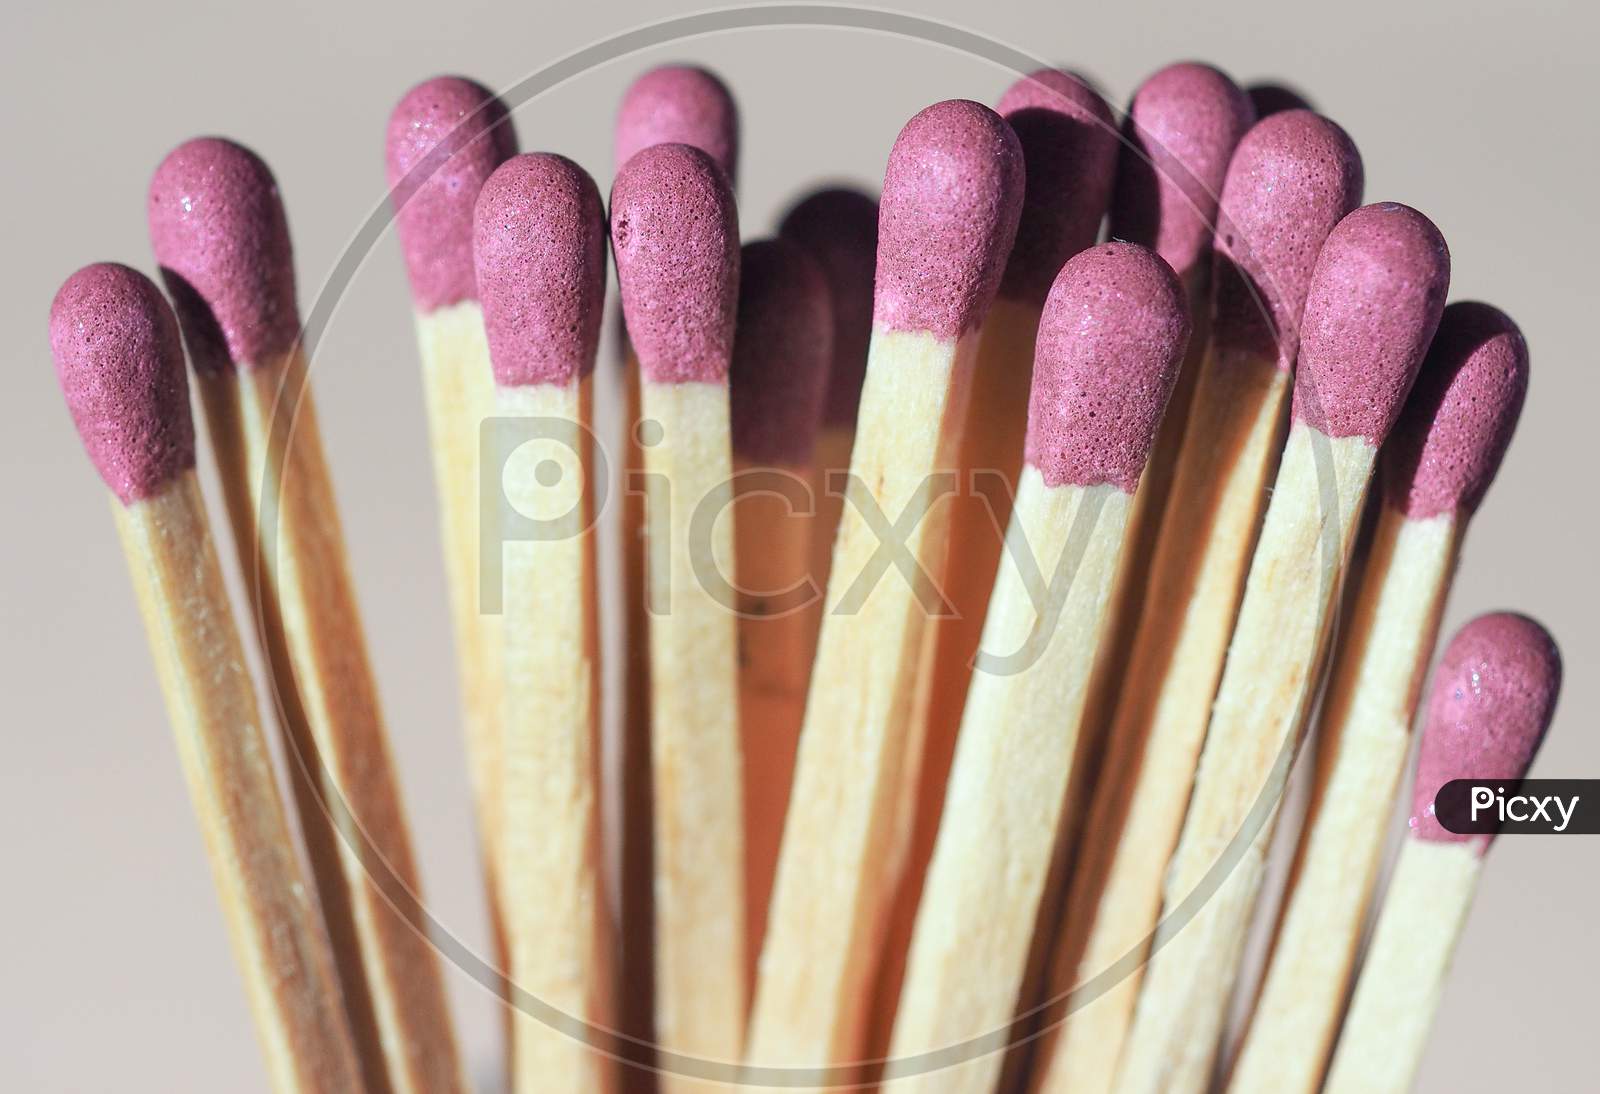 Matches Sticks For Lighting Fires